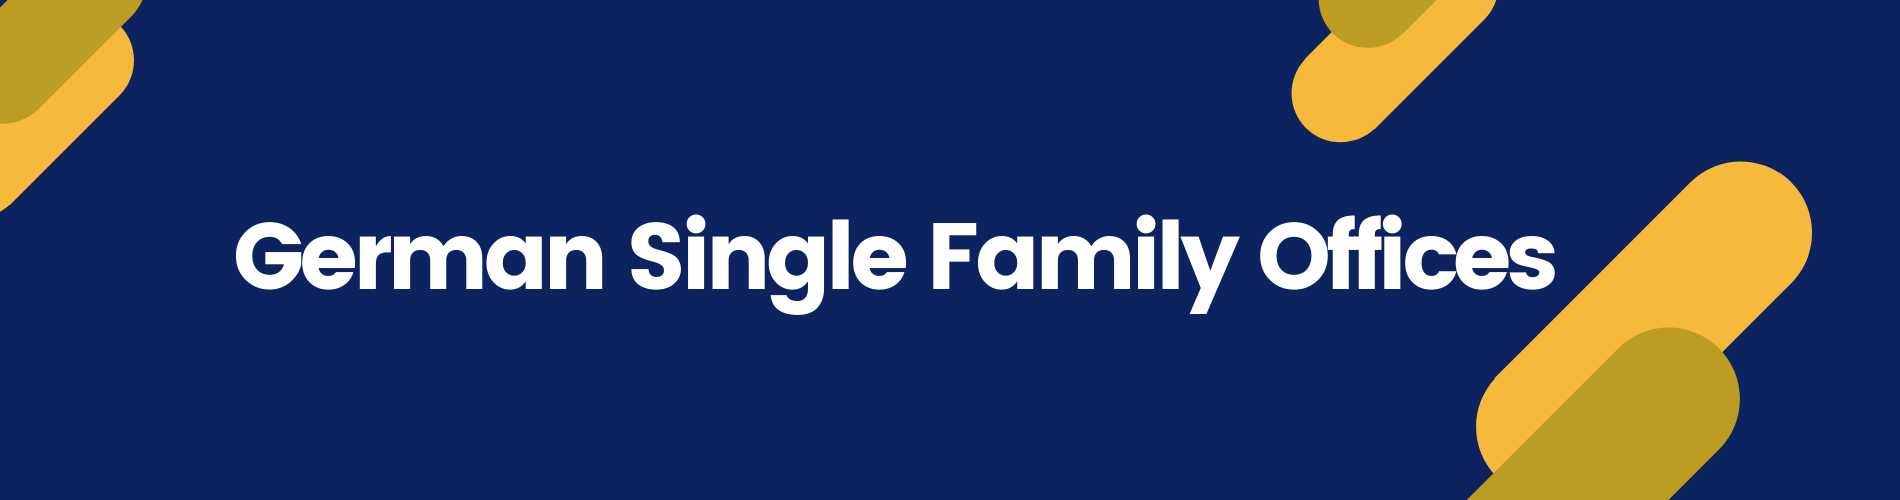 german single family office list